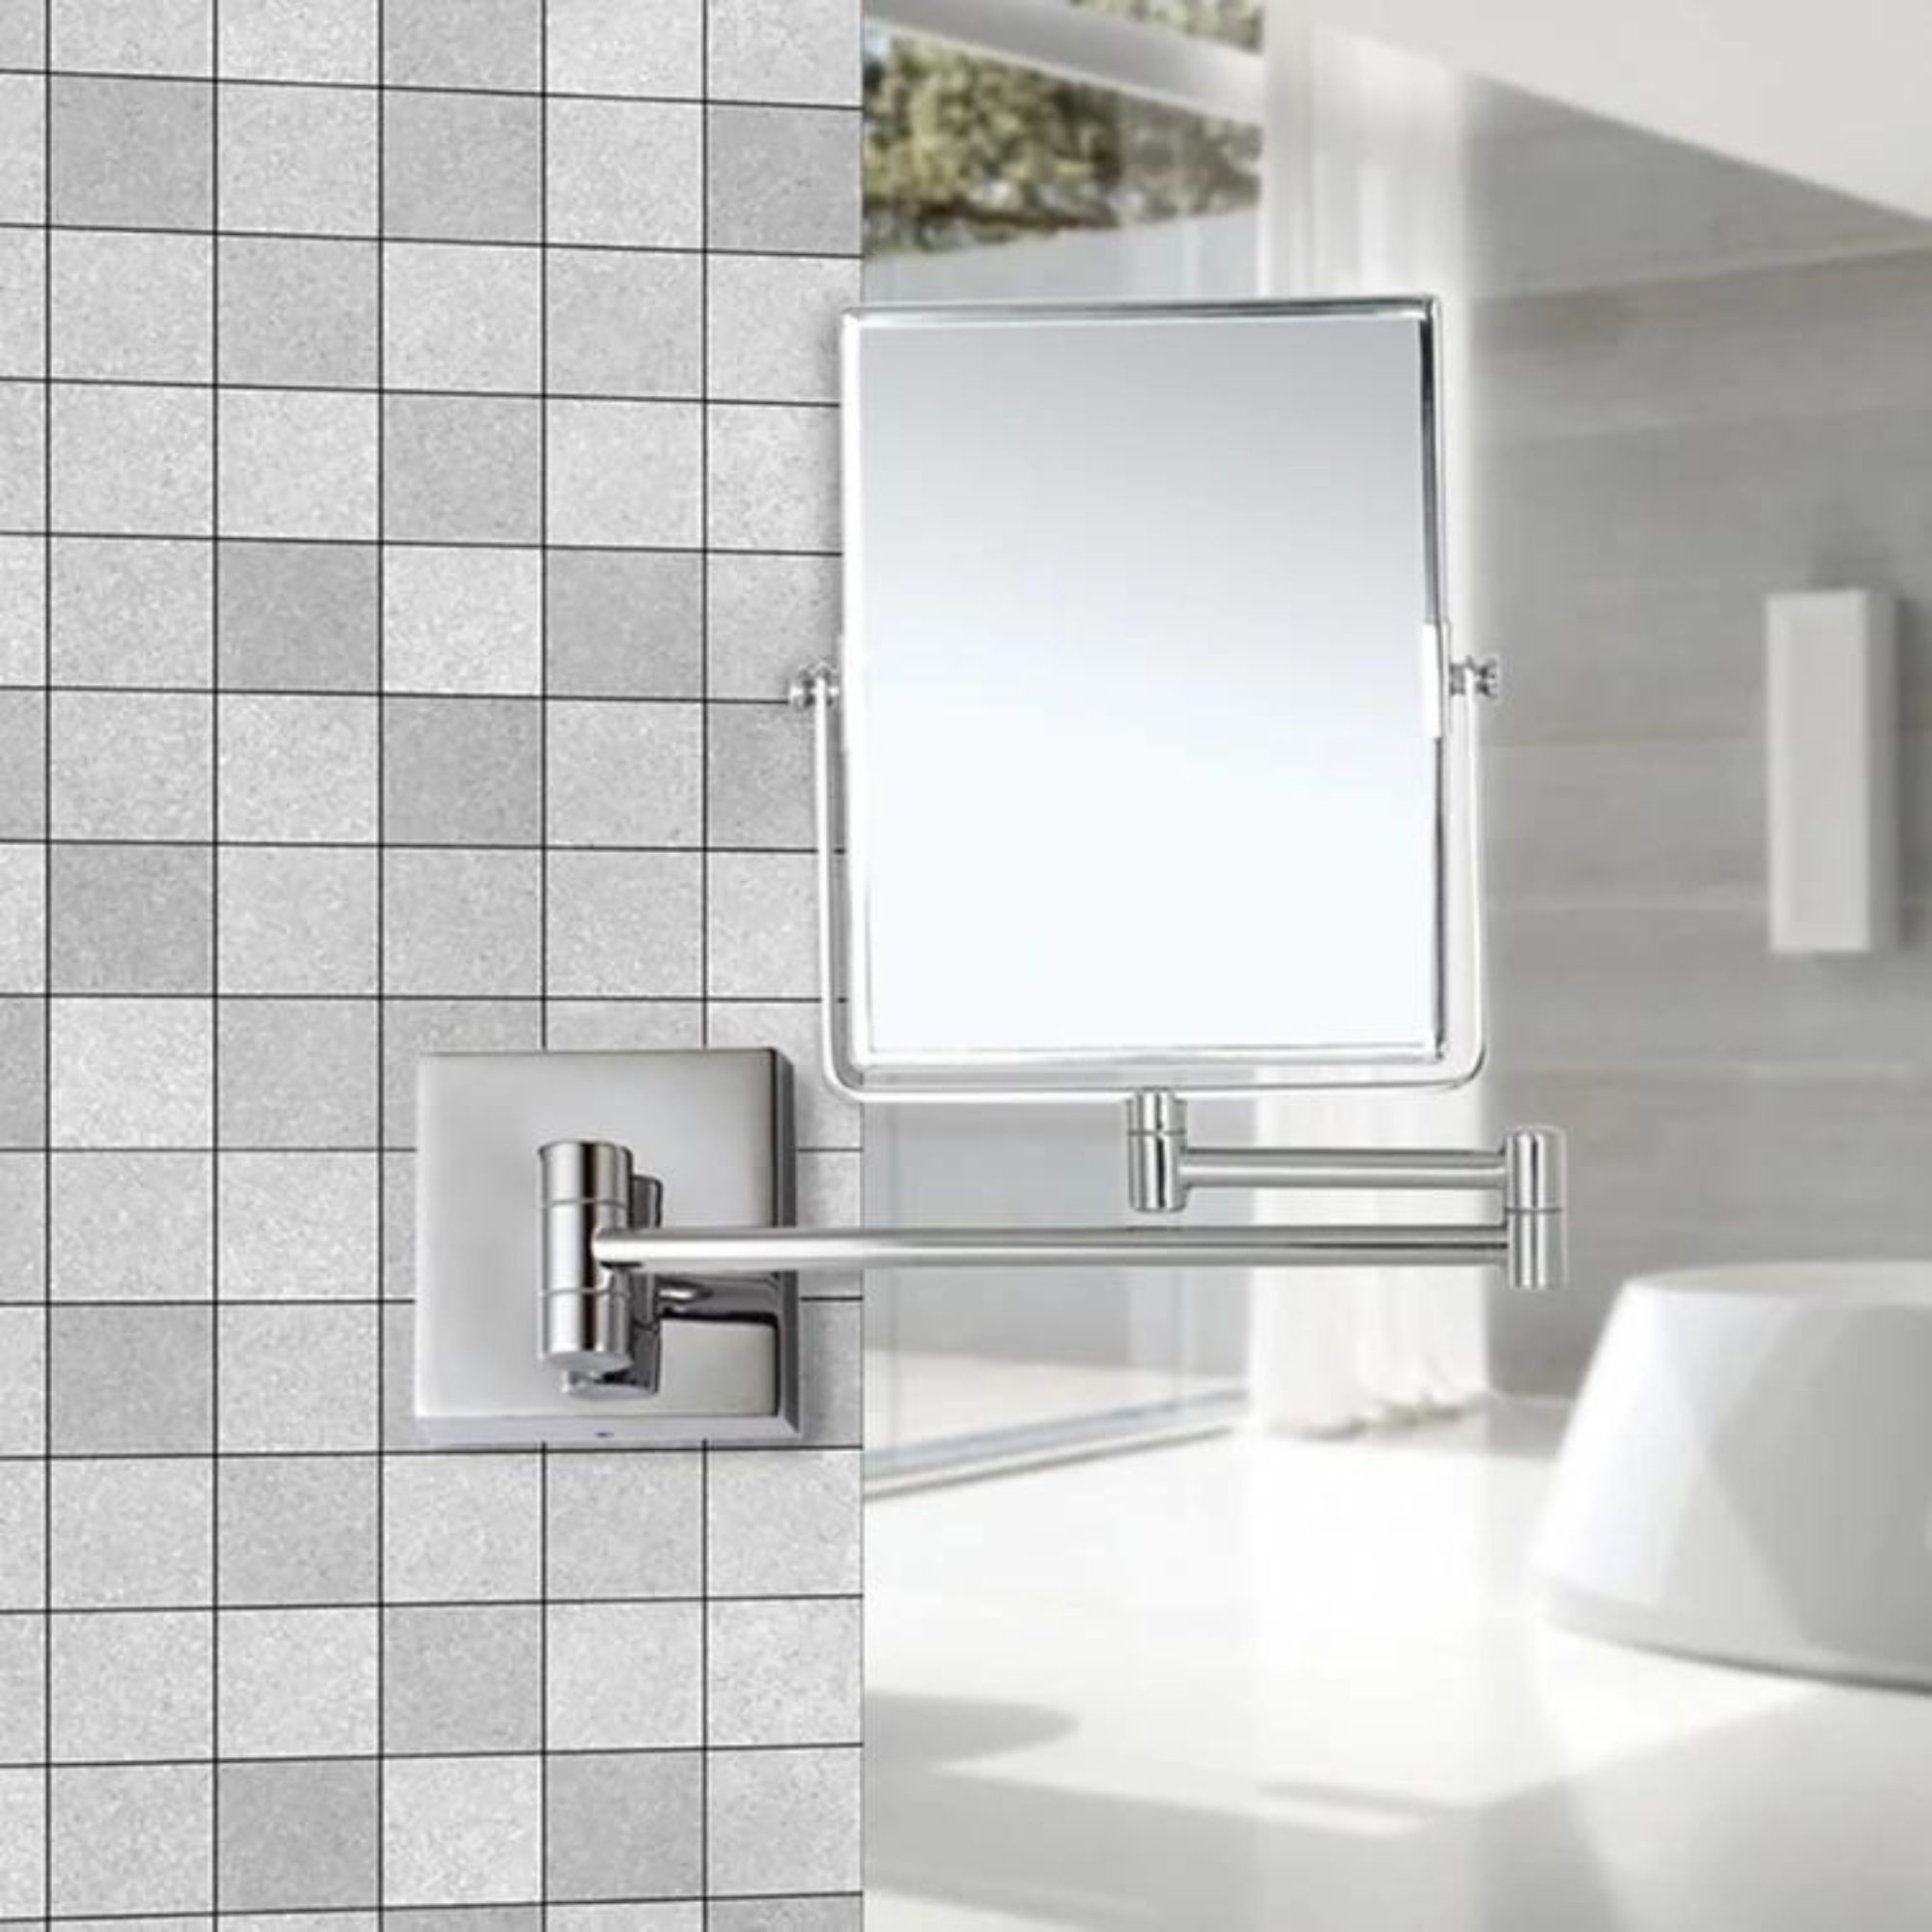 A rectangular vanity mirror mounted to a bathroom wall